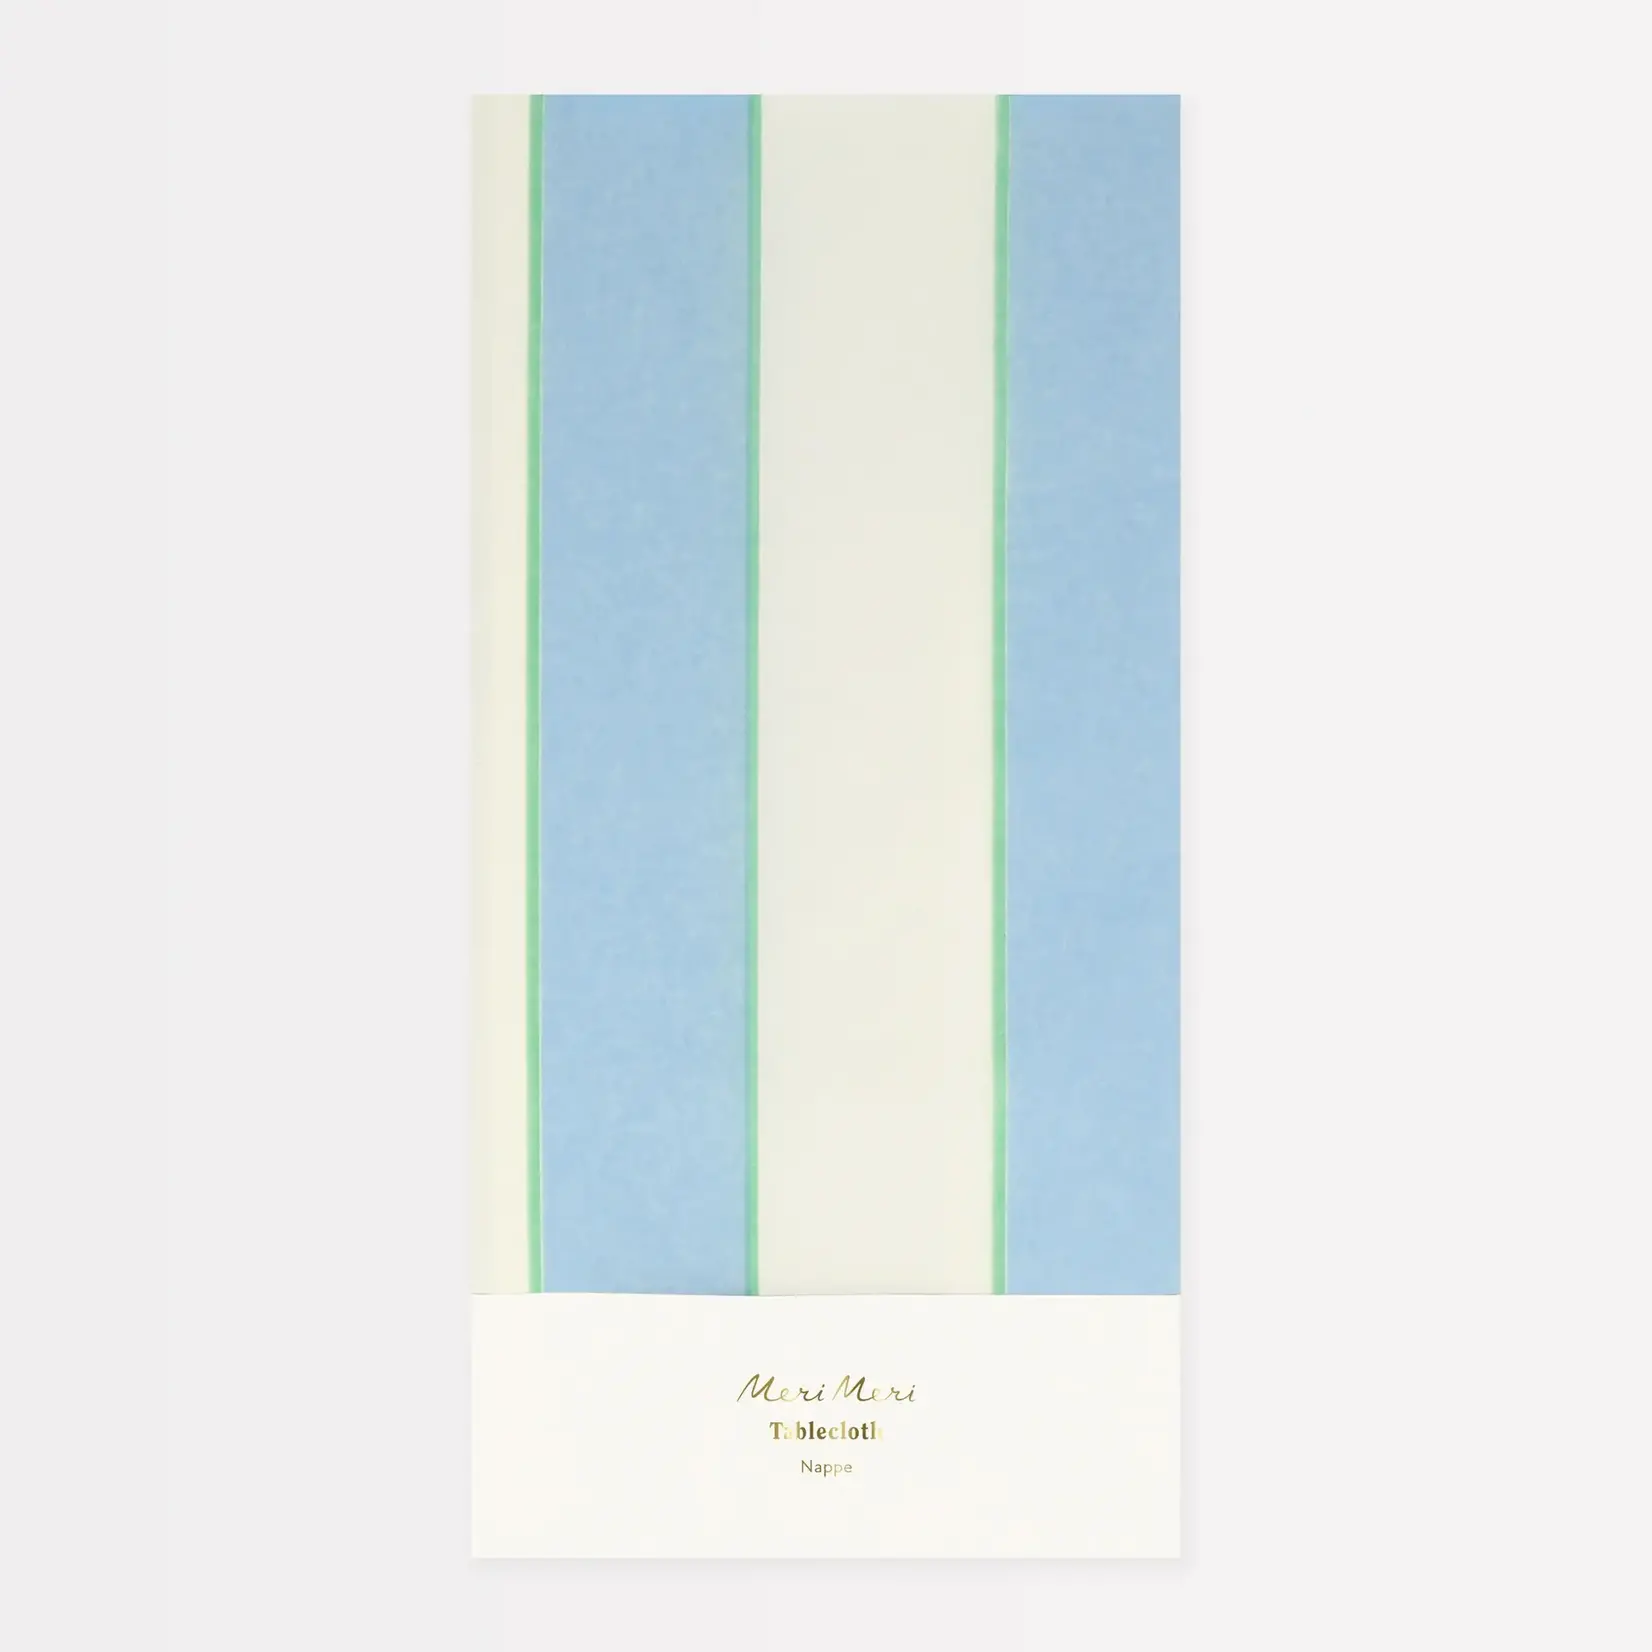 Meri Meri Pale Blue Stripe Tablecloth